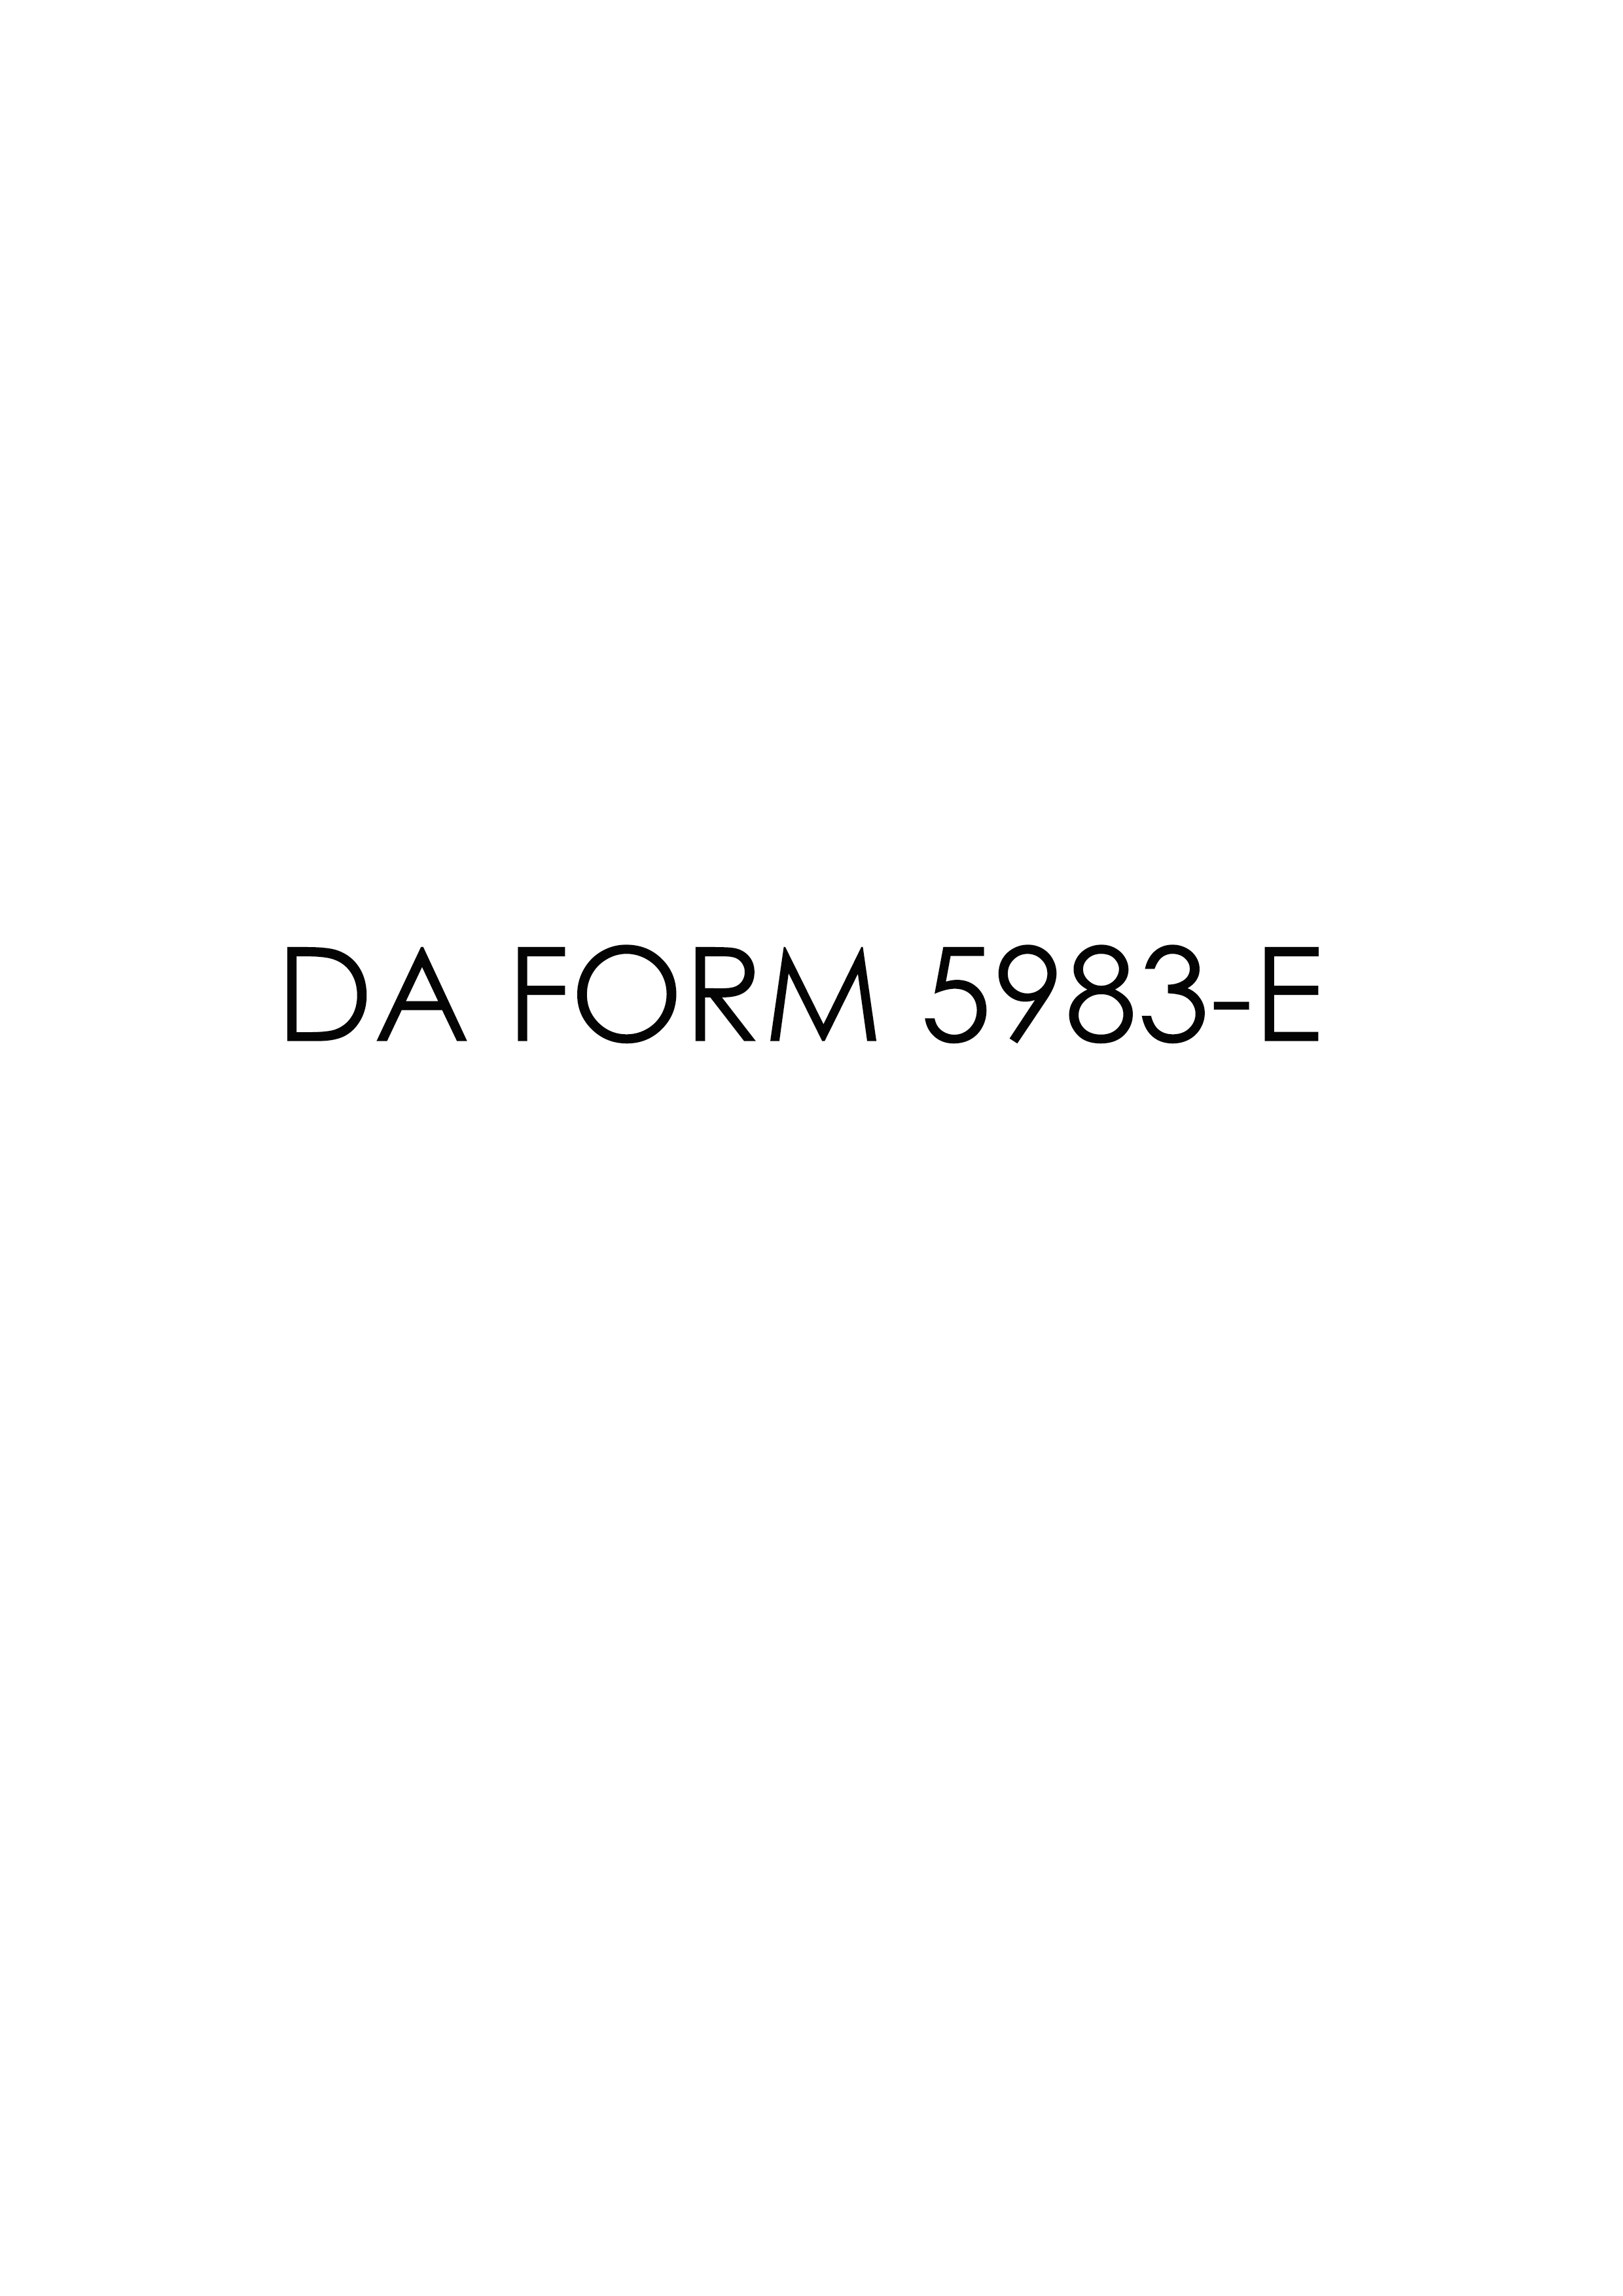 da Form 5983-E fillable